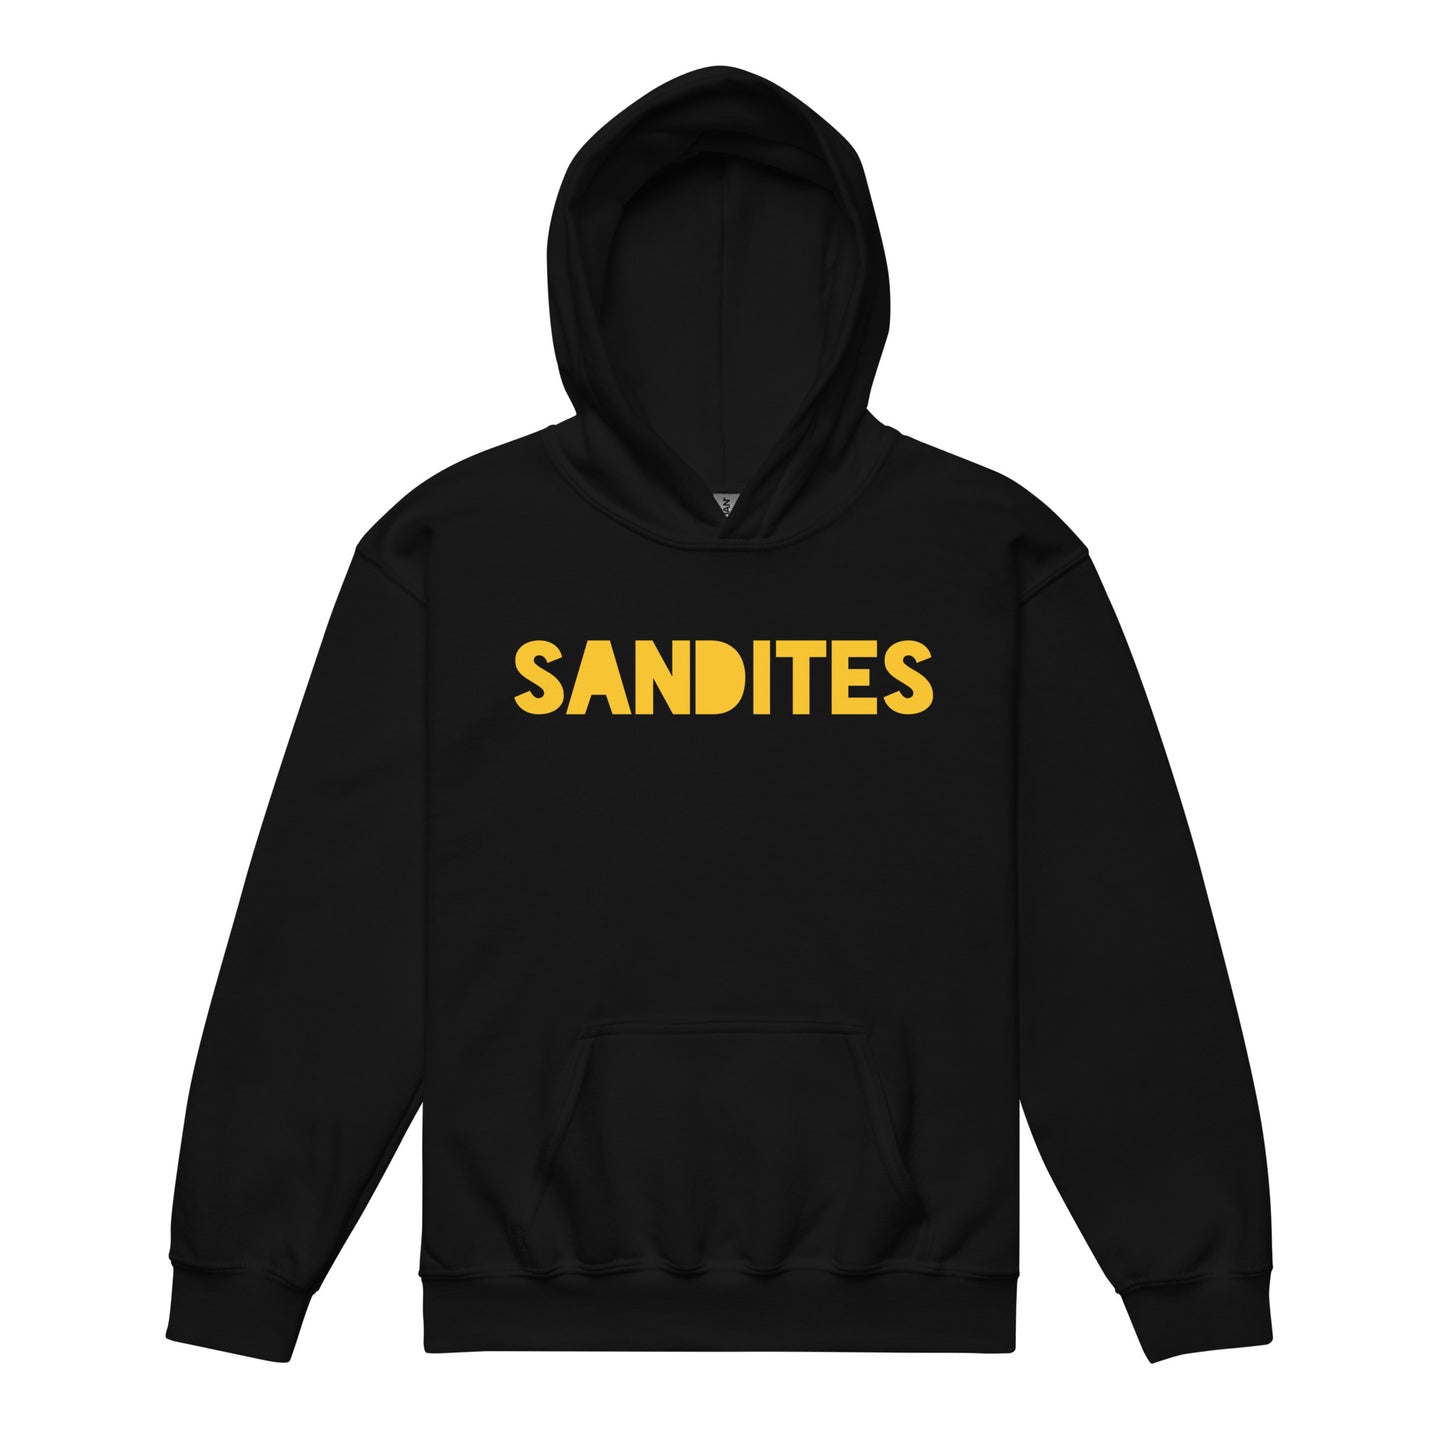 Sandites - Kids Hoodie